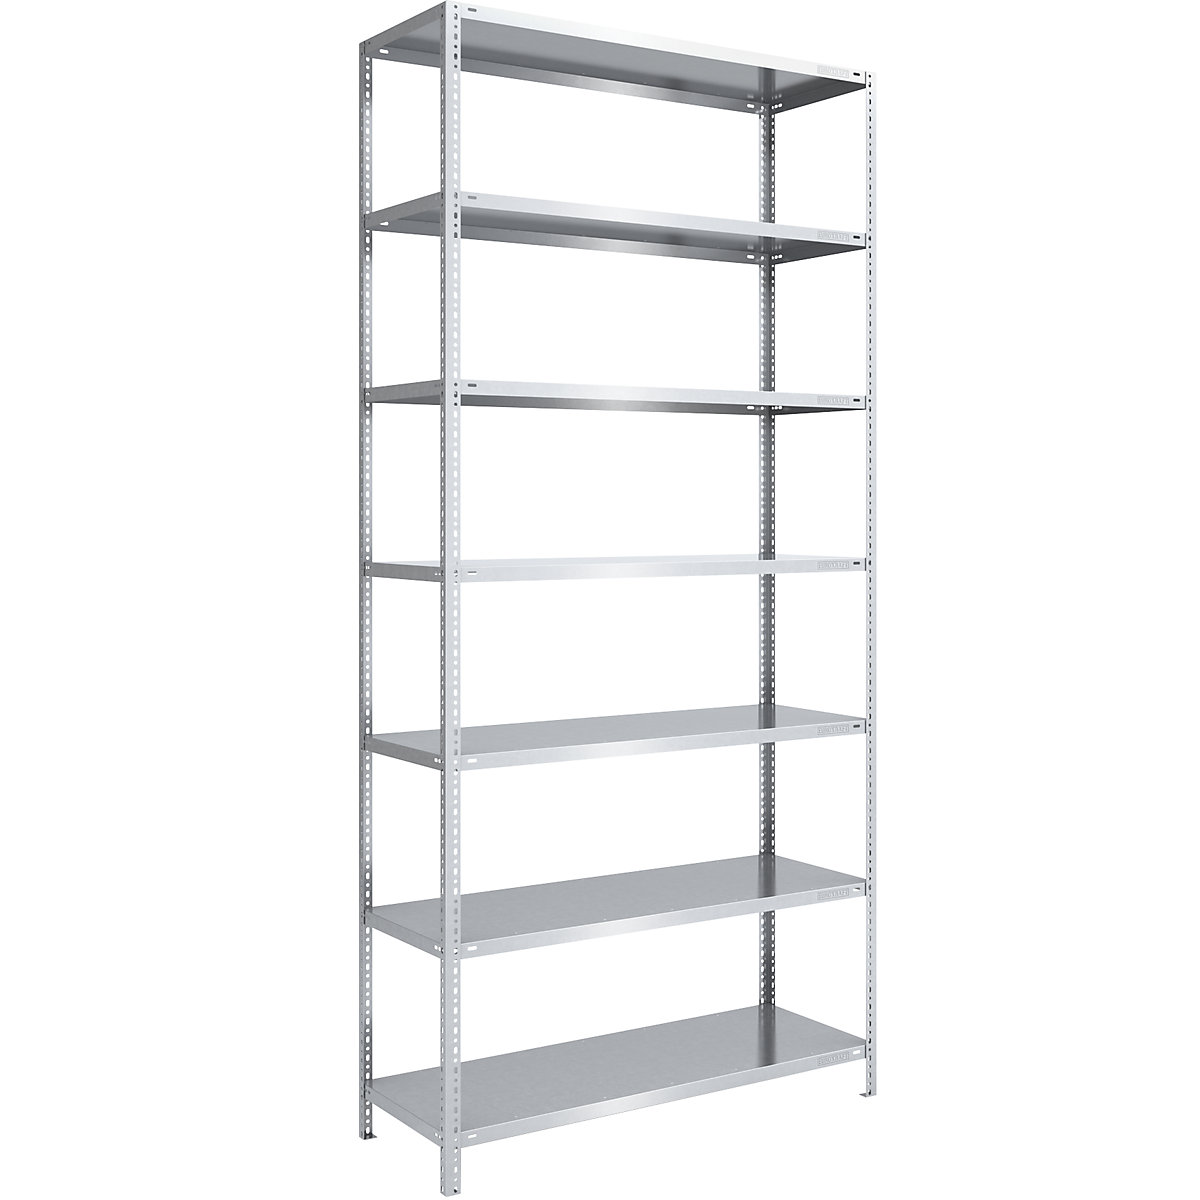 Bolt-together shelf unit, light duty, zinc plated – eurokraft pro, shelf unit height 3000 mm, shelf width 1300 mm, depth 600 mm, standard shelf unit-12